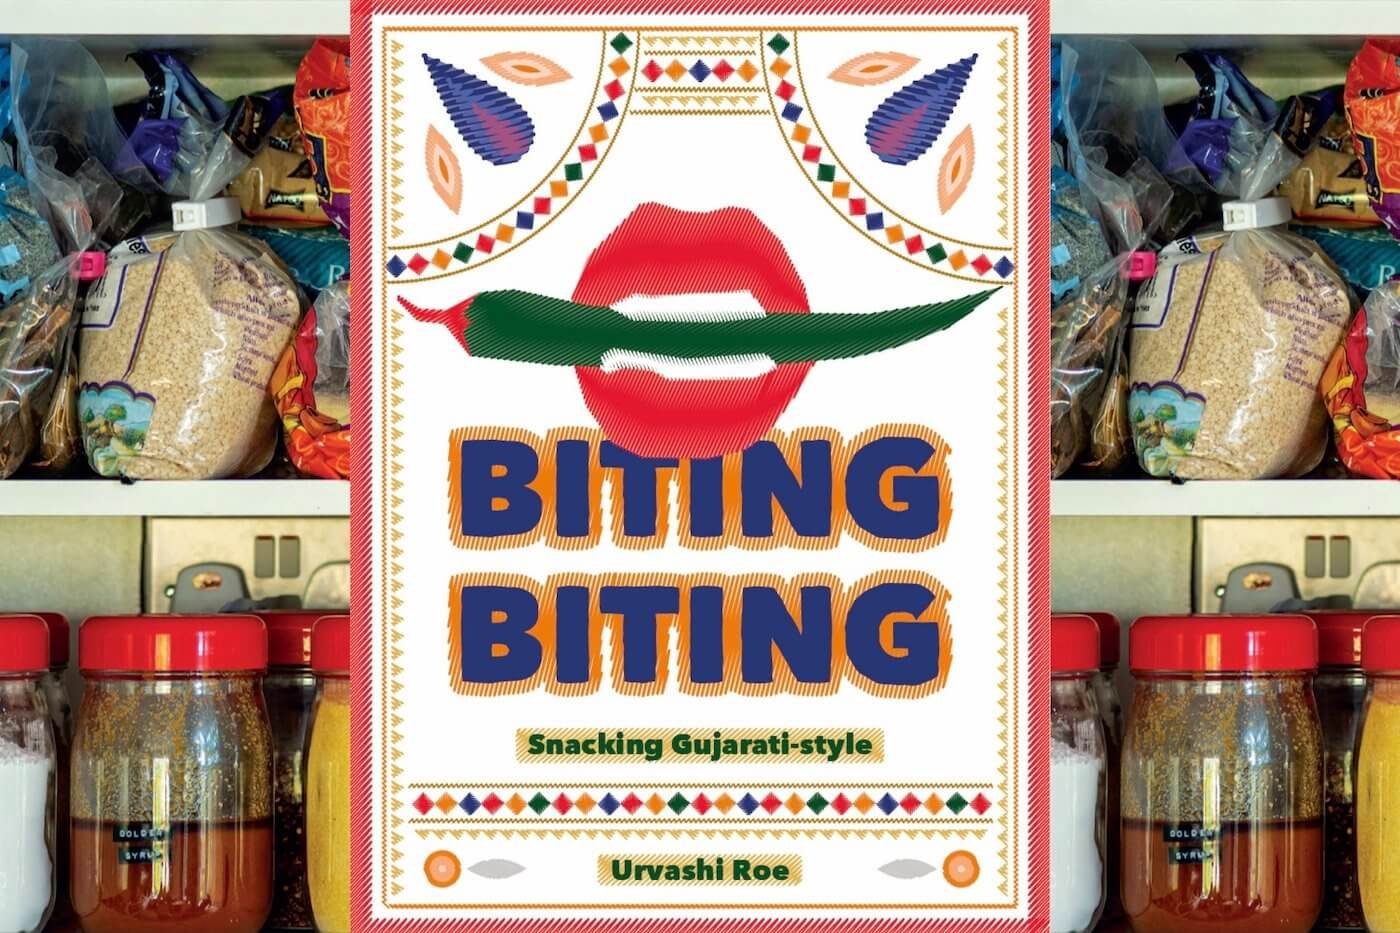 Just Published: Biting Biting